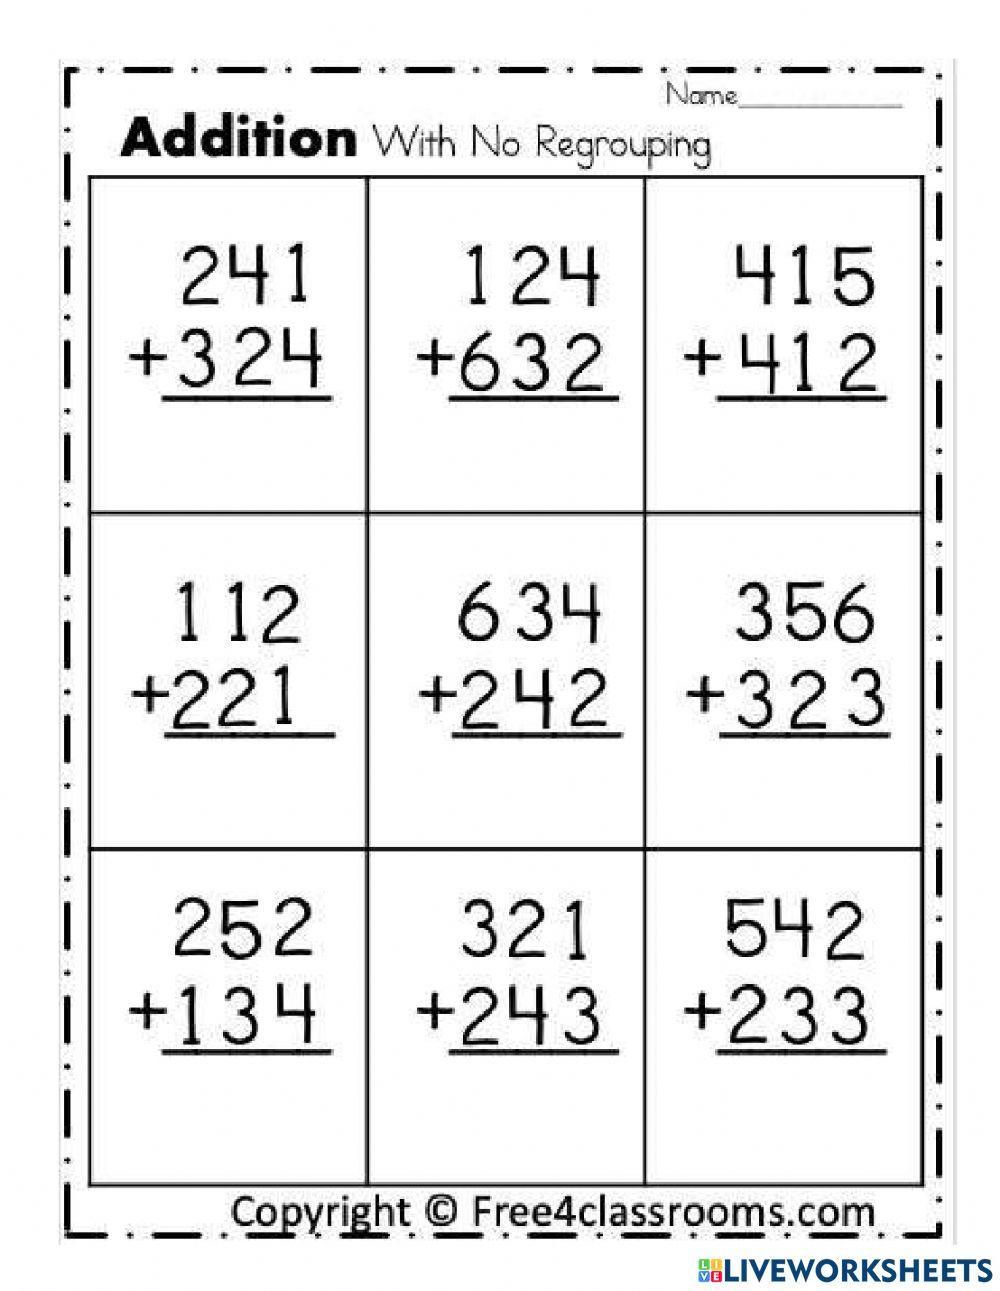 Adding three-digit numbers